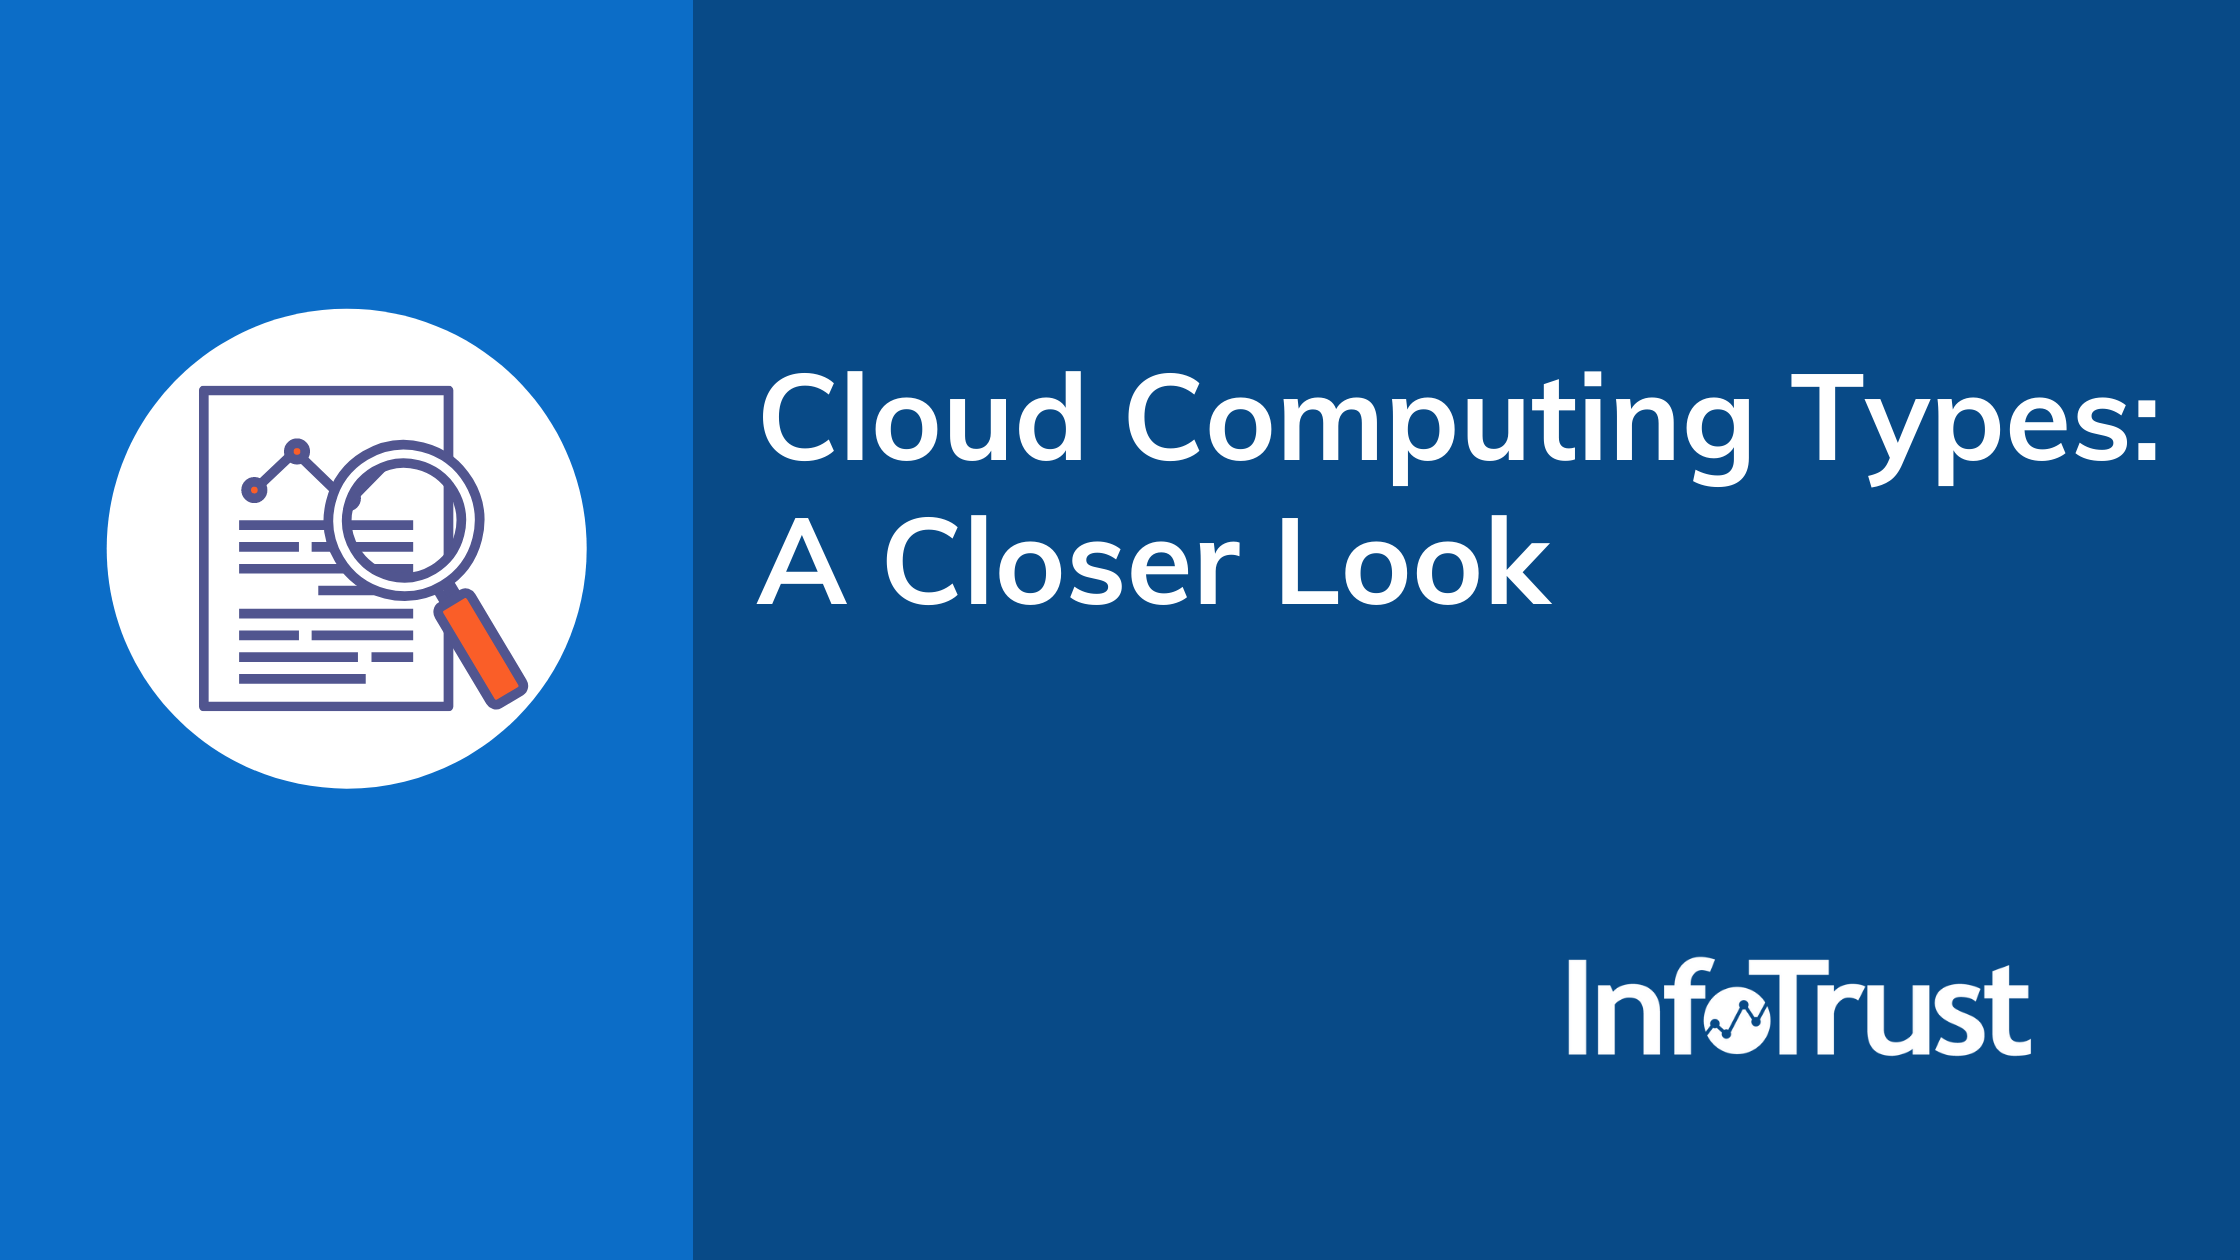 Cloud Computing Types: A Closer Look